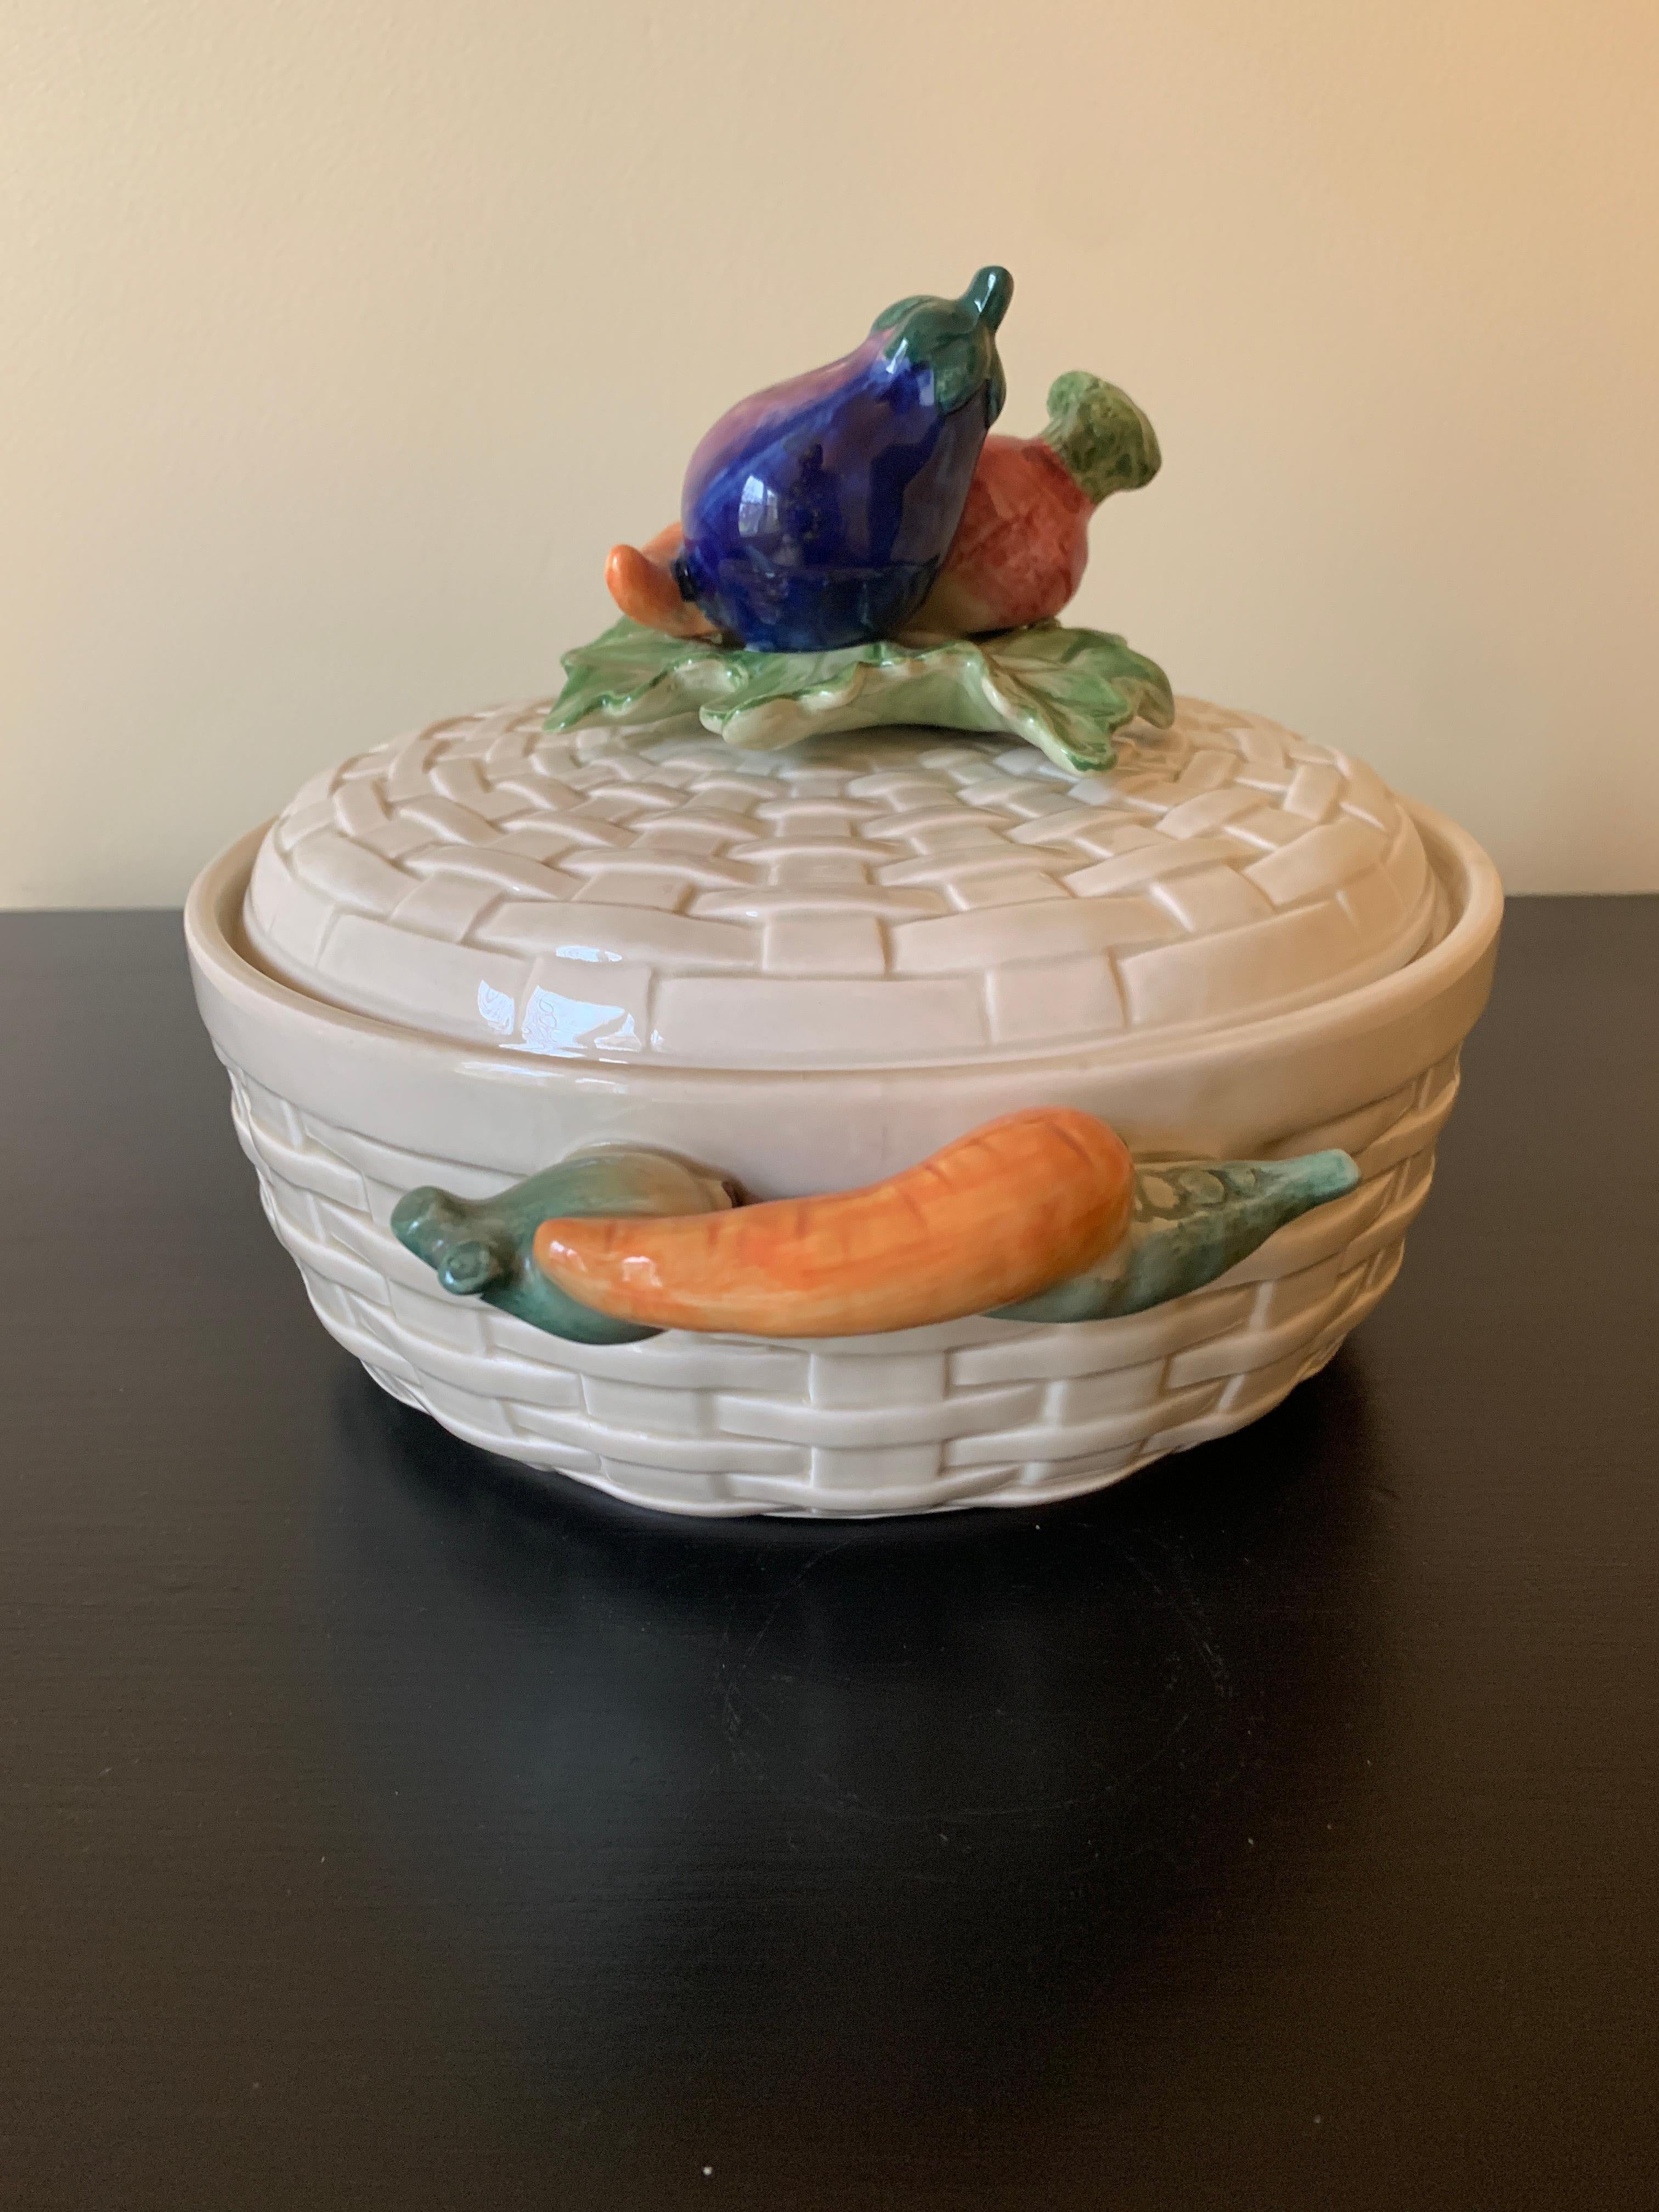 Fitz & Floyd Glazed Ceramic Trompe l'Oeil Woven Basket With Vegetables Casserole For Sale 2